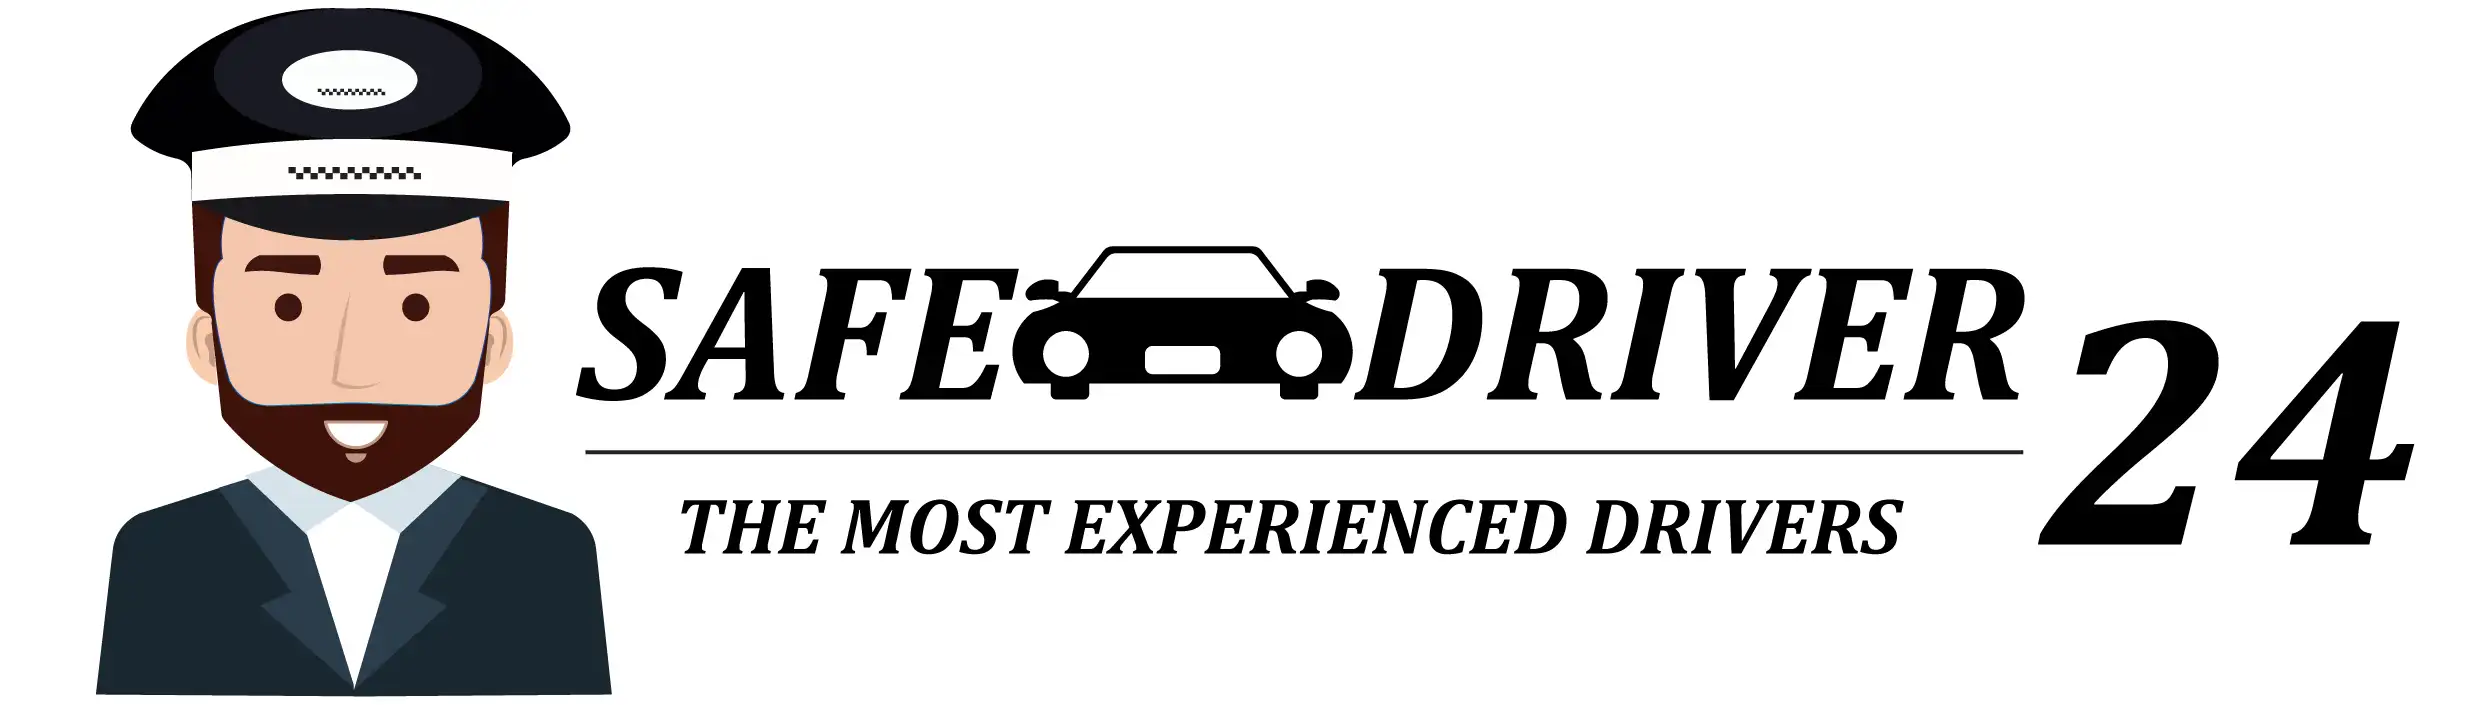 logo super drive 24